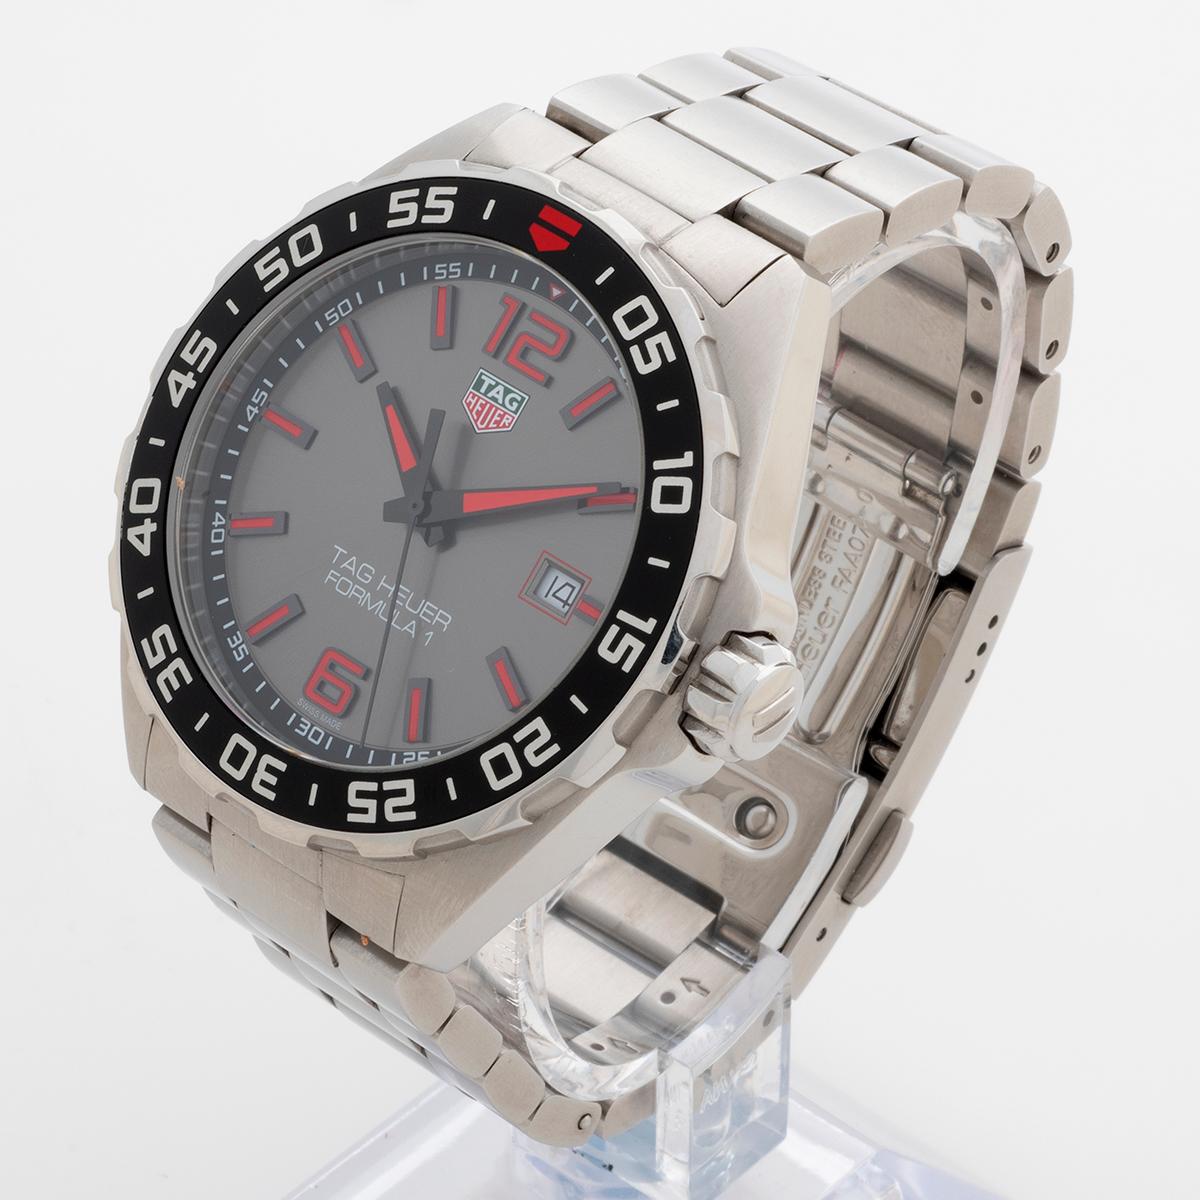 Women's or Men's Tag Heuer Formula 1 Wristwatch ref WAZ1018, Quartz, 43mm Case, Year 2020.